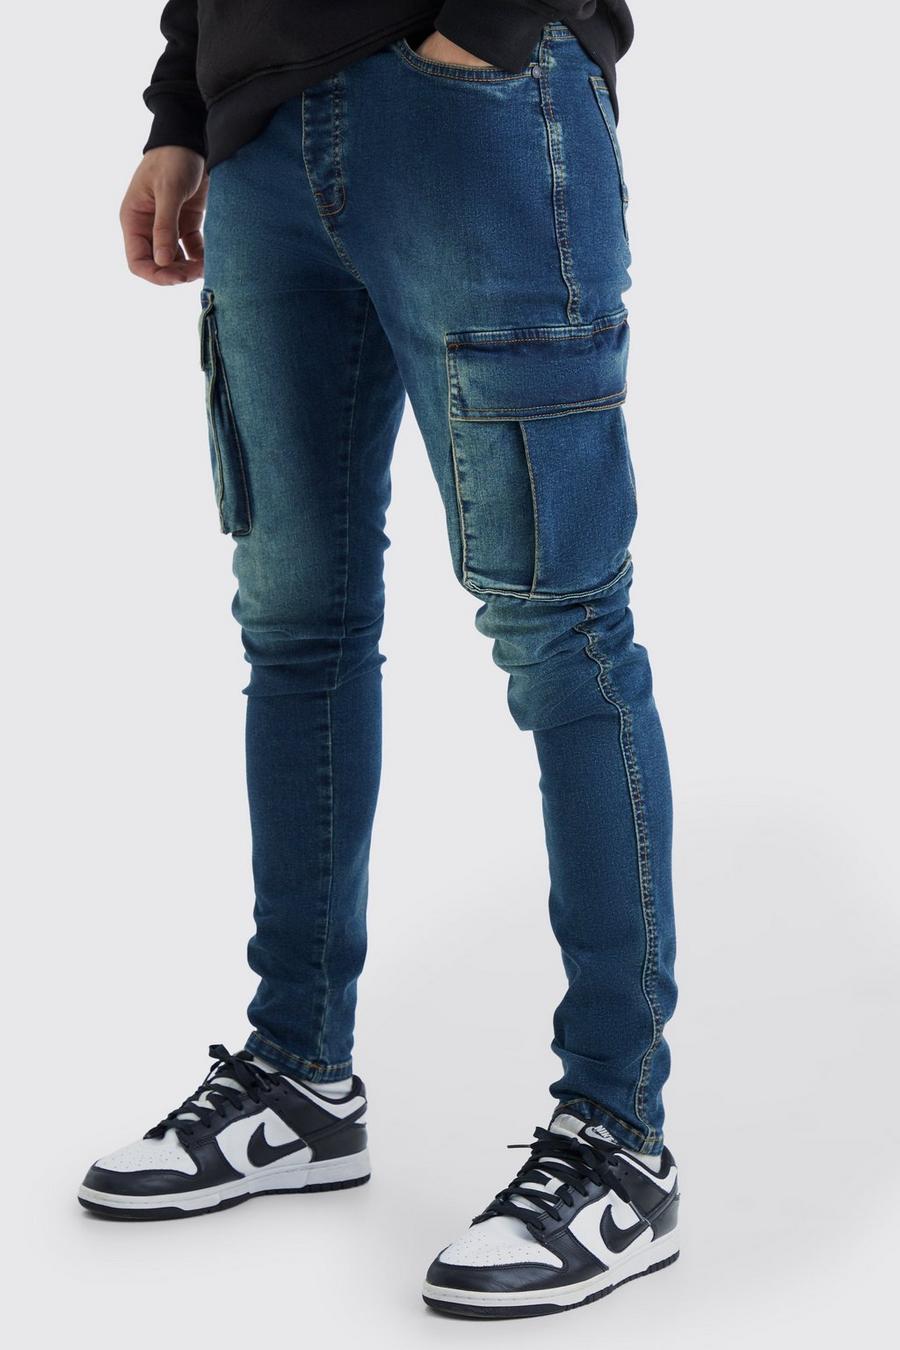 Jeans Cargo Tall Super Skinny Fit in Stretch, Antique blue